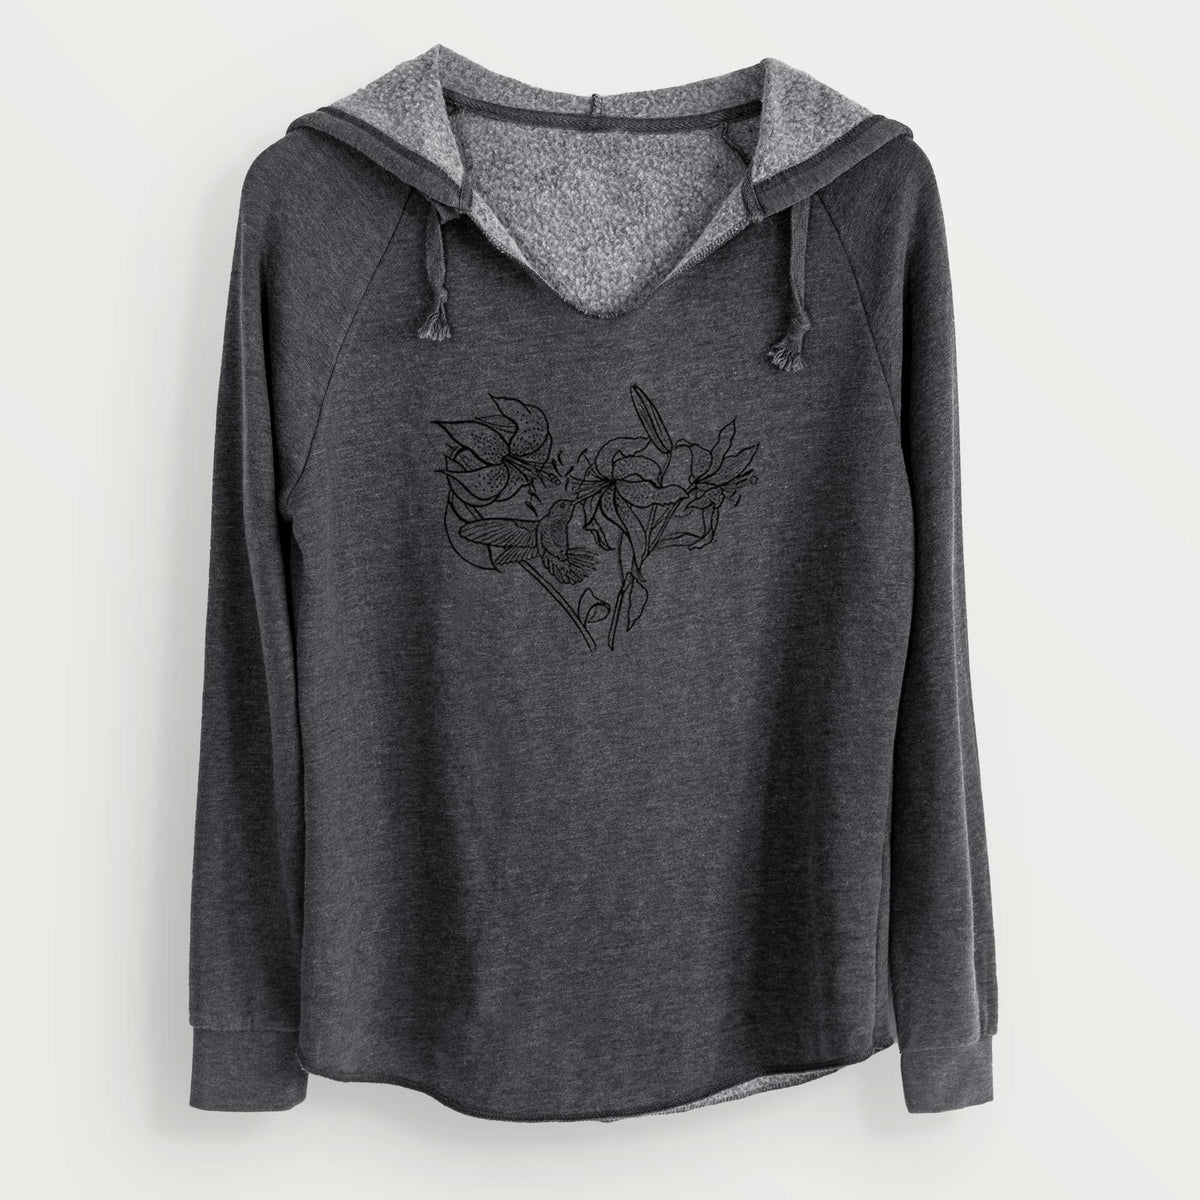 Hummingbird with Lillies Heart - Cali Wave Hooded Sweatshirt